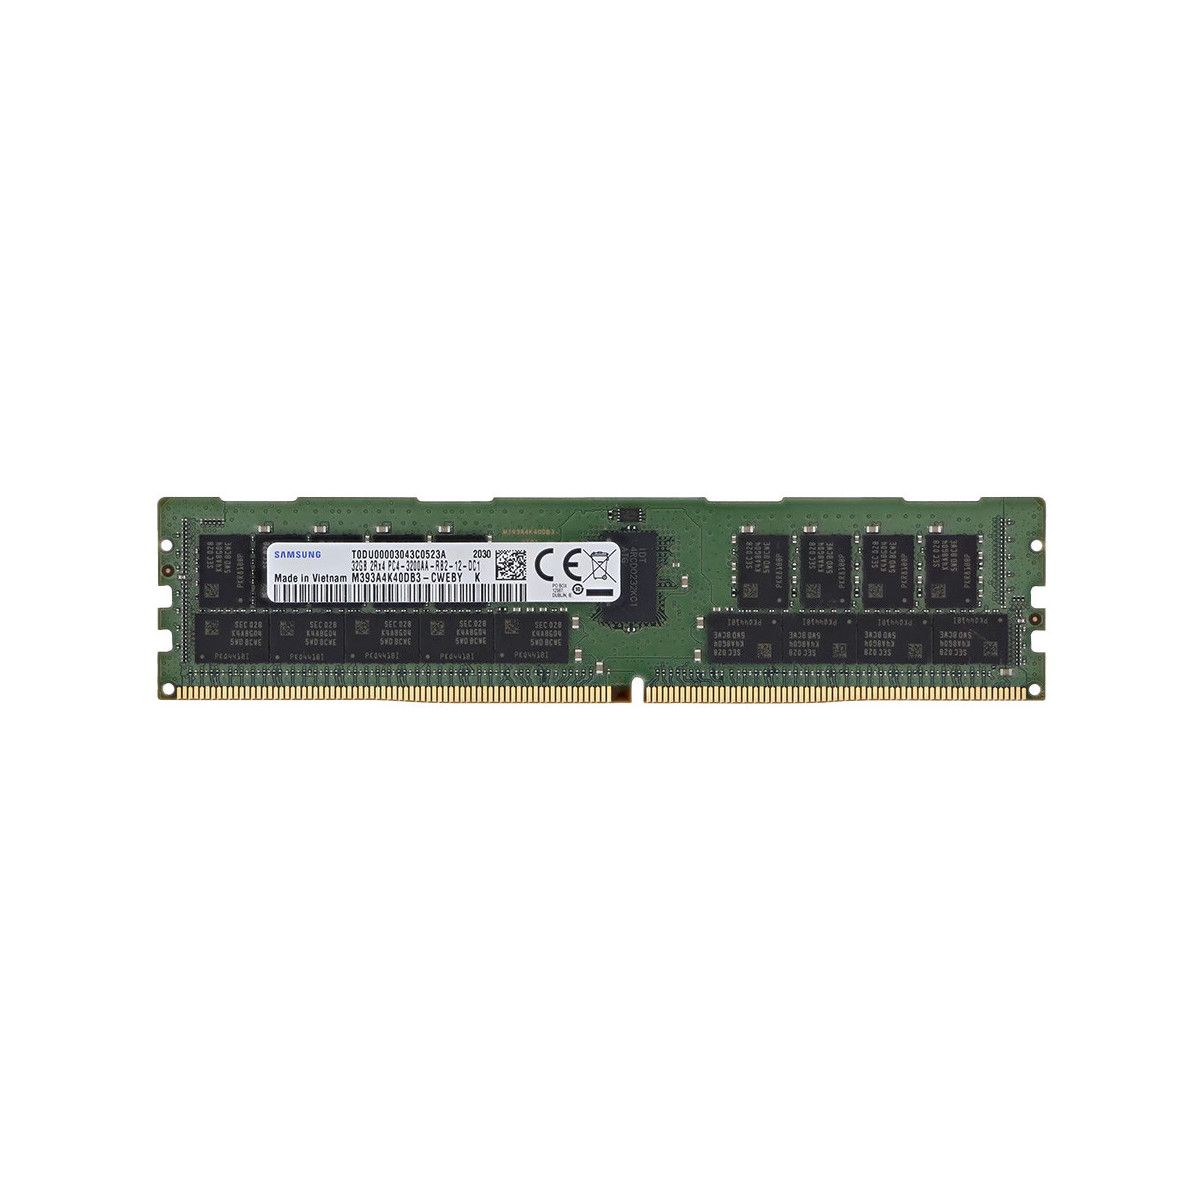 SNP75X1VC/32G-MS - Memstar 1x 32GB DDR4-3200 RDIMM PC4-25600R - Memorie OEM compatibilă Mem-Star 1 - Memstar 